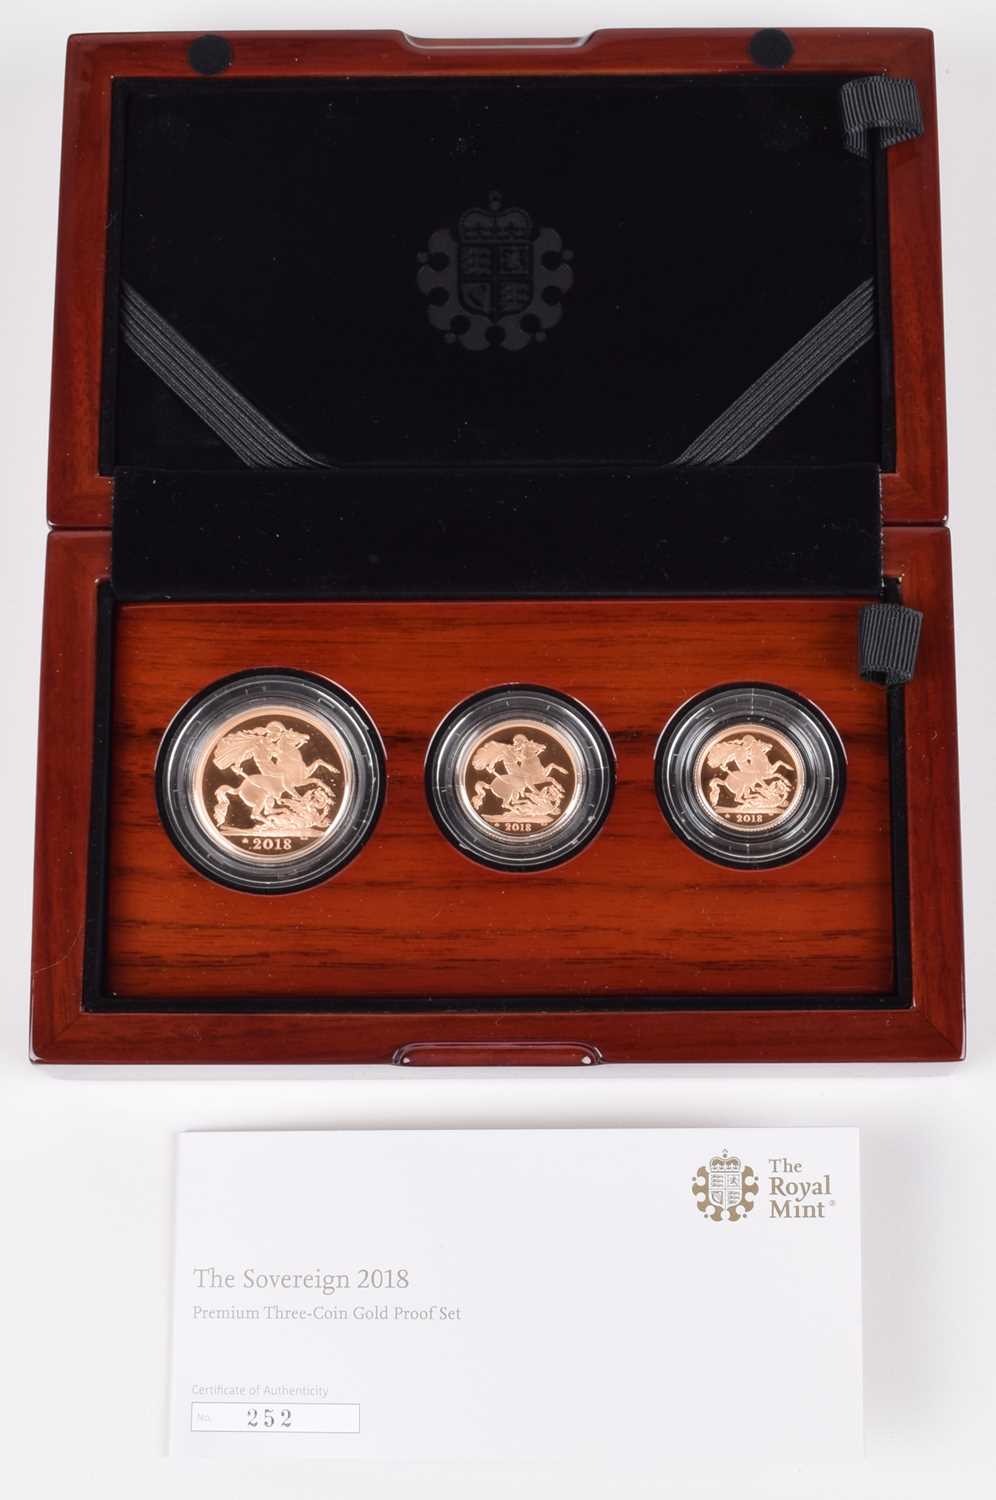 Lot 27 - Elizabeth II, United Kingdom, 2018, The Sovereign Premium Three-Coin Gold Proof Set, Royal Mint.